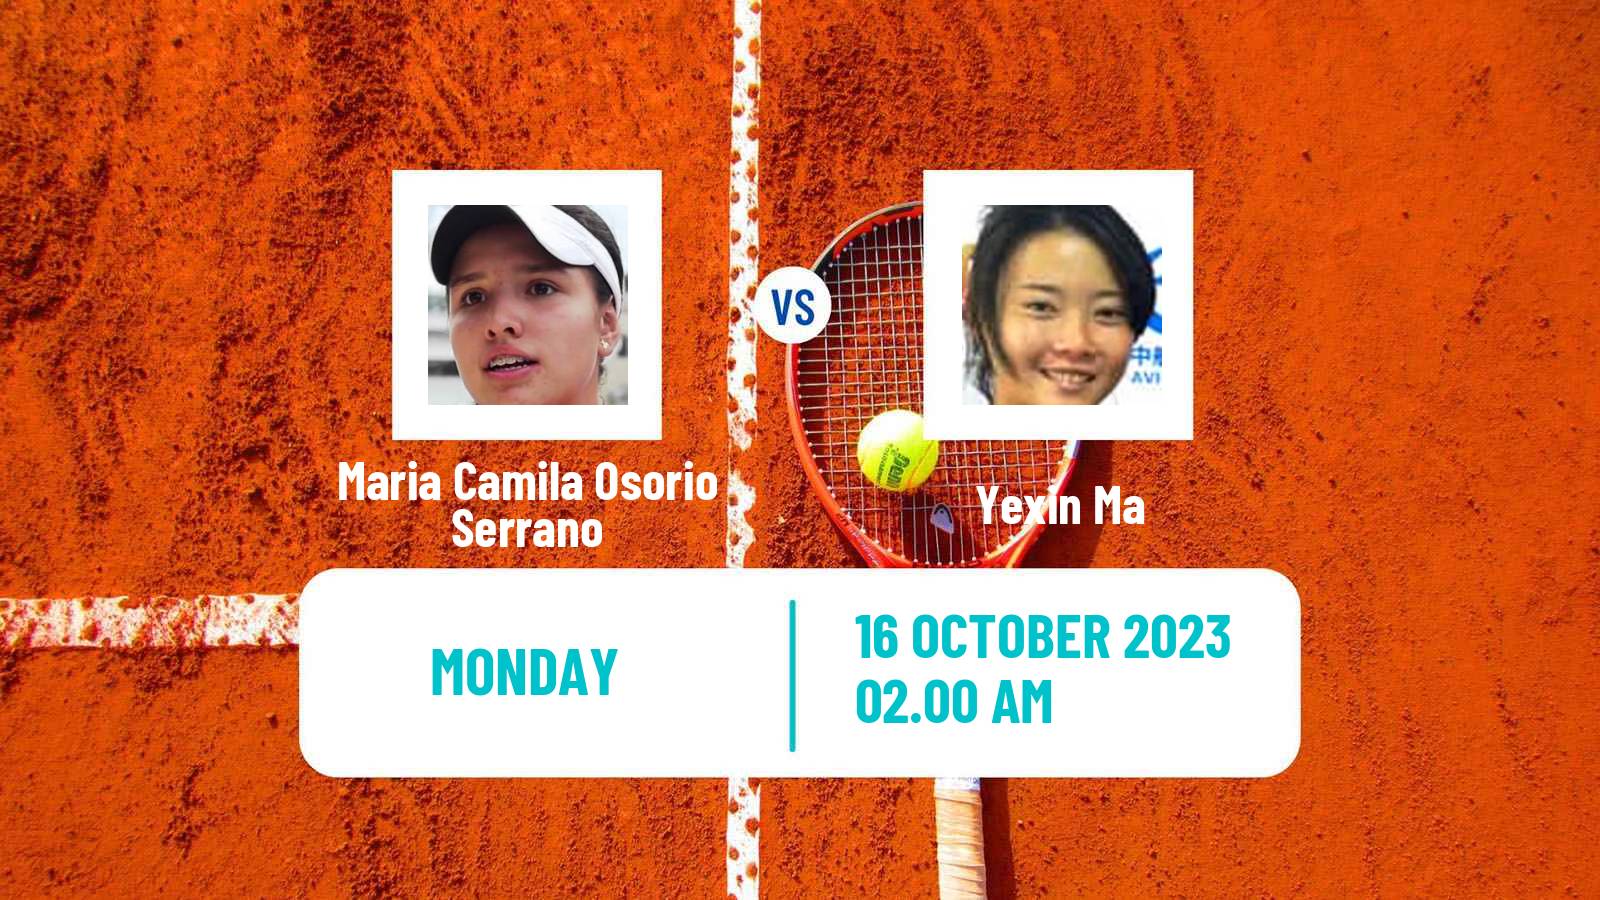 Tennis WTA Nanchang Maria Camila Osorio Serrano - Yexin Ma